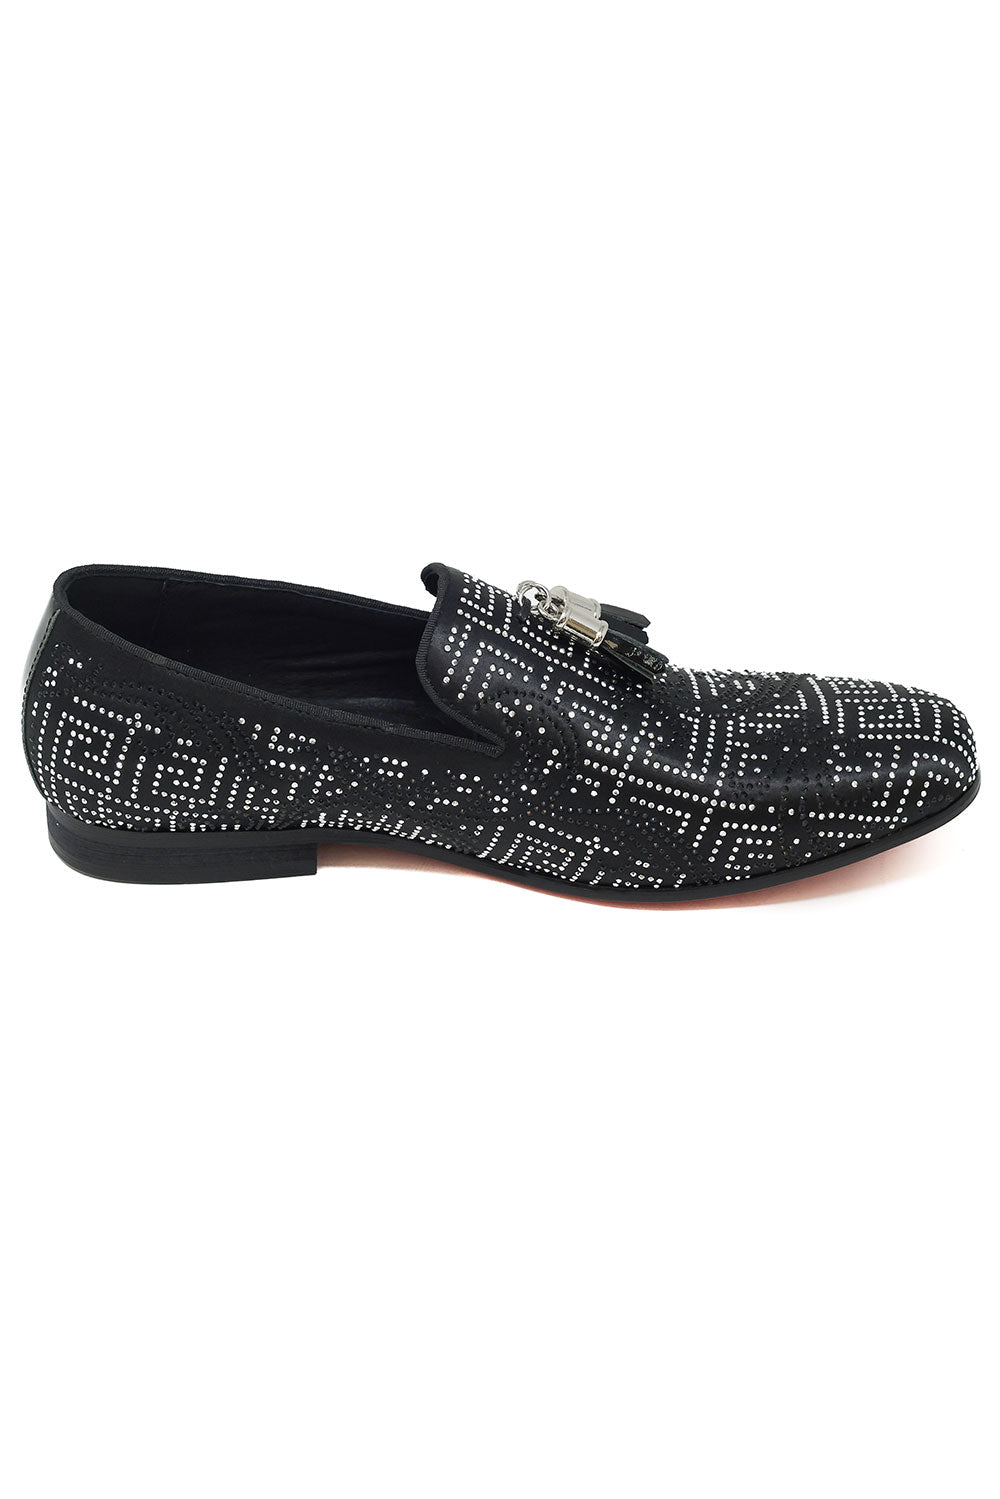 Barabas Men's Greek Key Pattern Tassel Slip On Loafer Shoes 2SH3102ST Black Silver